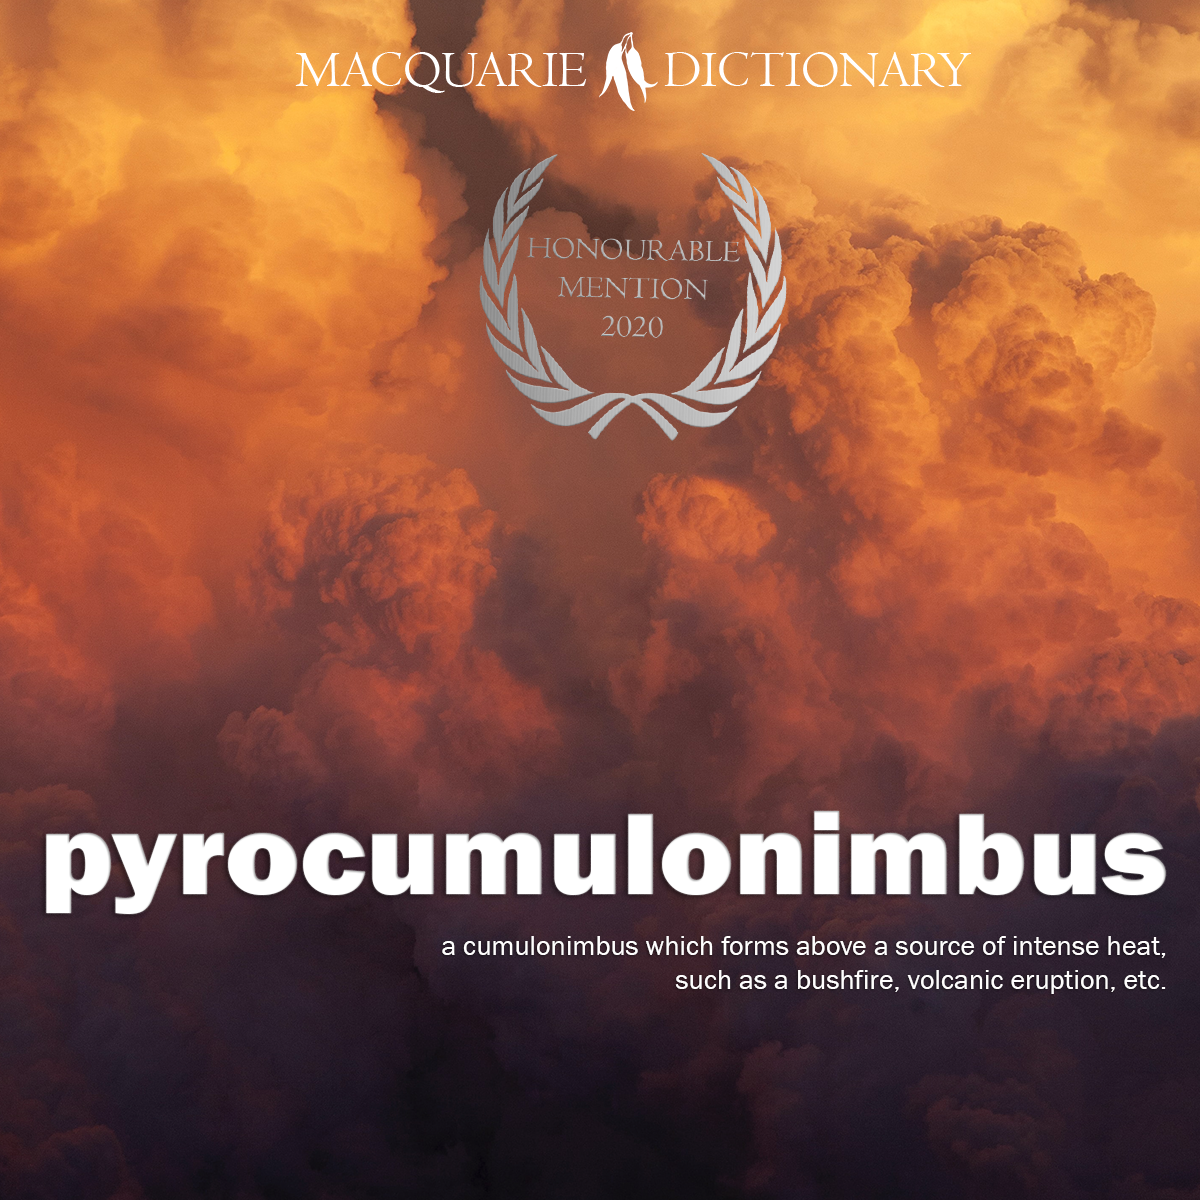 pyrocumulonimbus - a cumulonimbus which forms above a source of intense heat, such as a bushfire, volcanic eruption, etc.